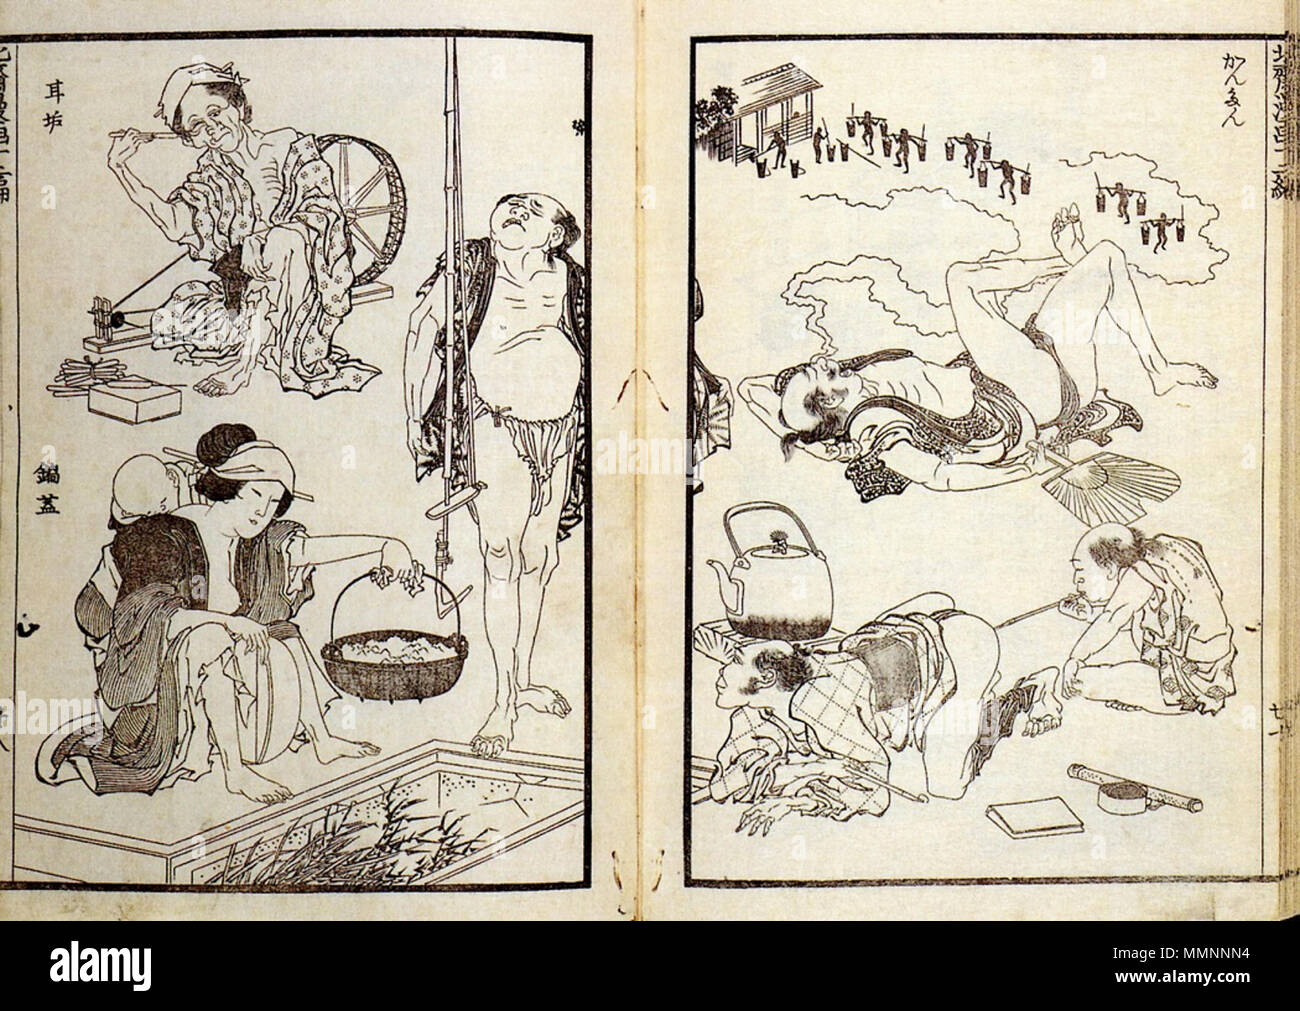 . Englisch: Katsushika Hokusai: Hokusai manga, XII, 1834. 1834. hokusai, Masanobu, Kiyonobu, XVII-XIX Jahrhundert HOKUSAI Manga - XII. Stockfoto